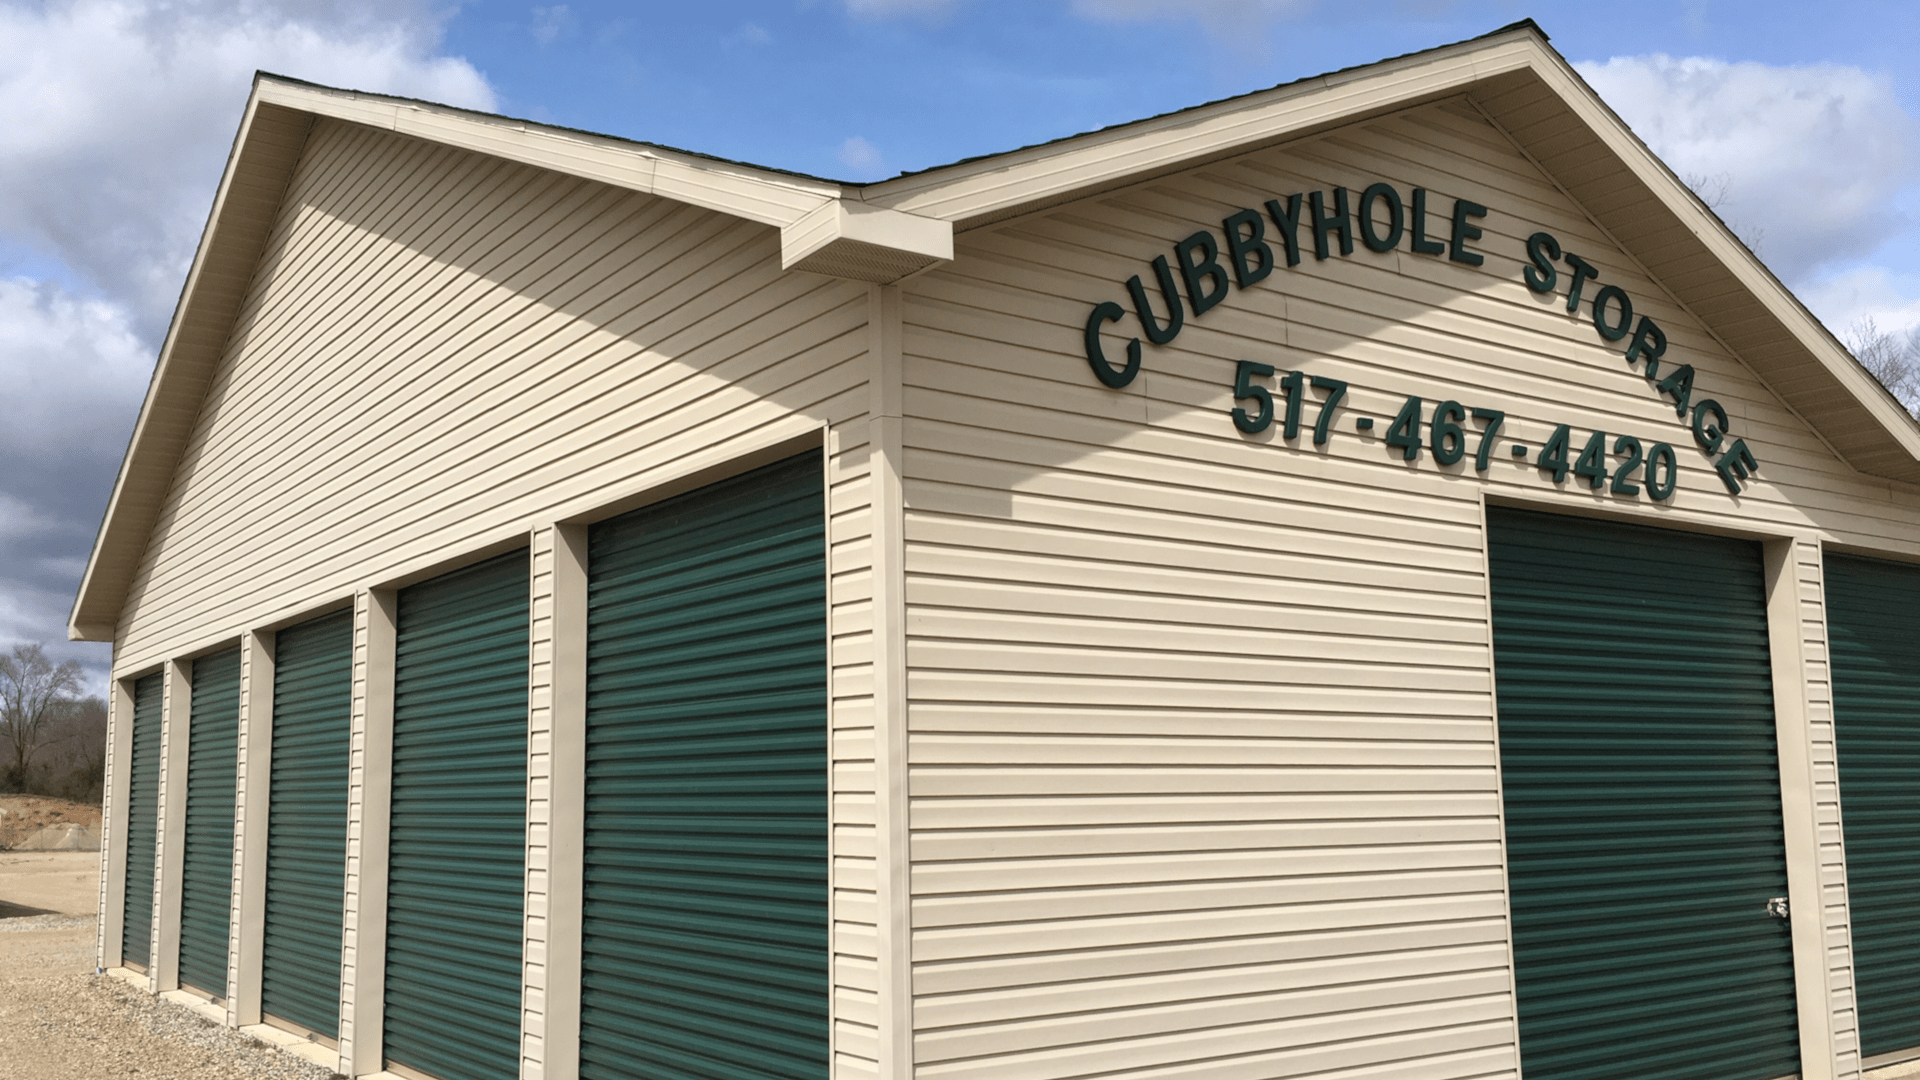 Cubbyhole Storage